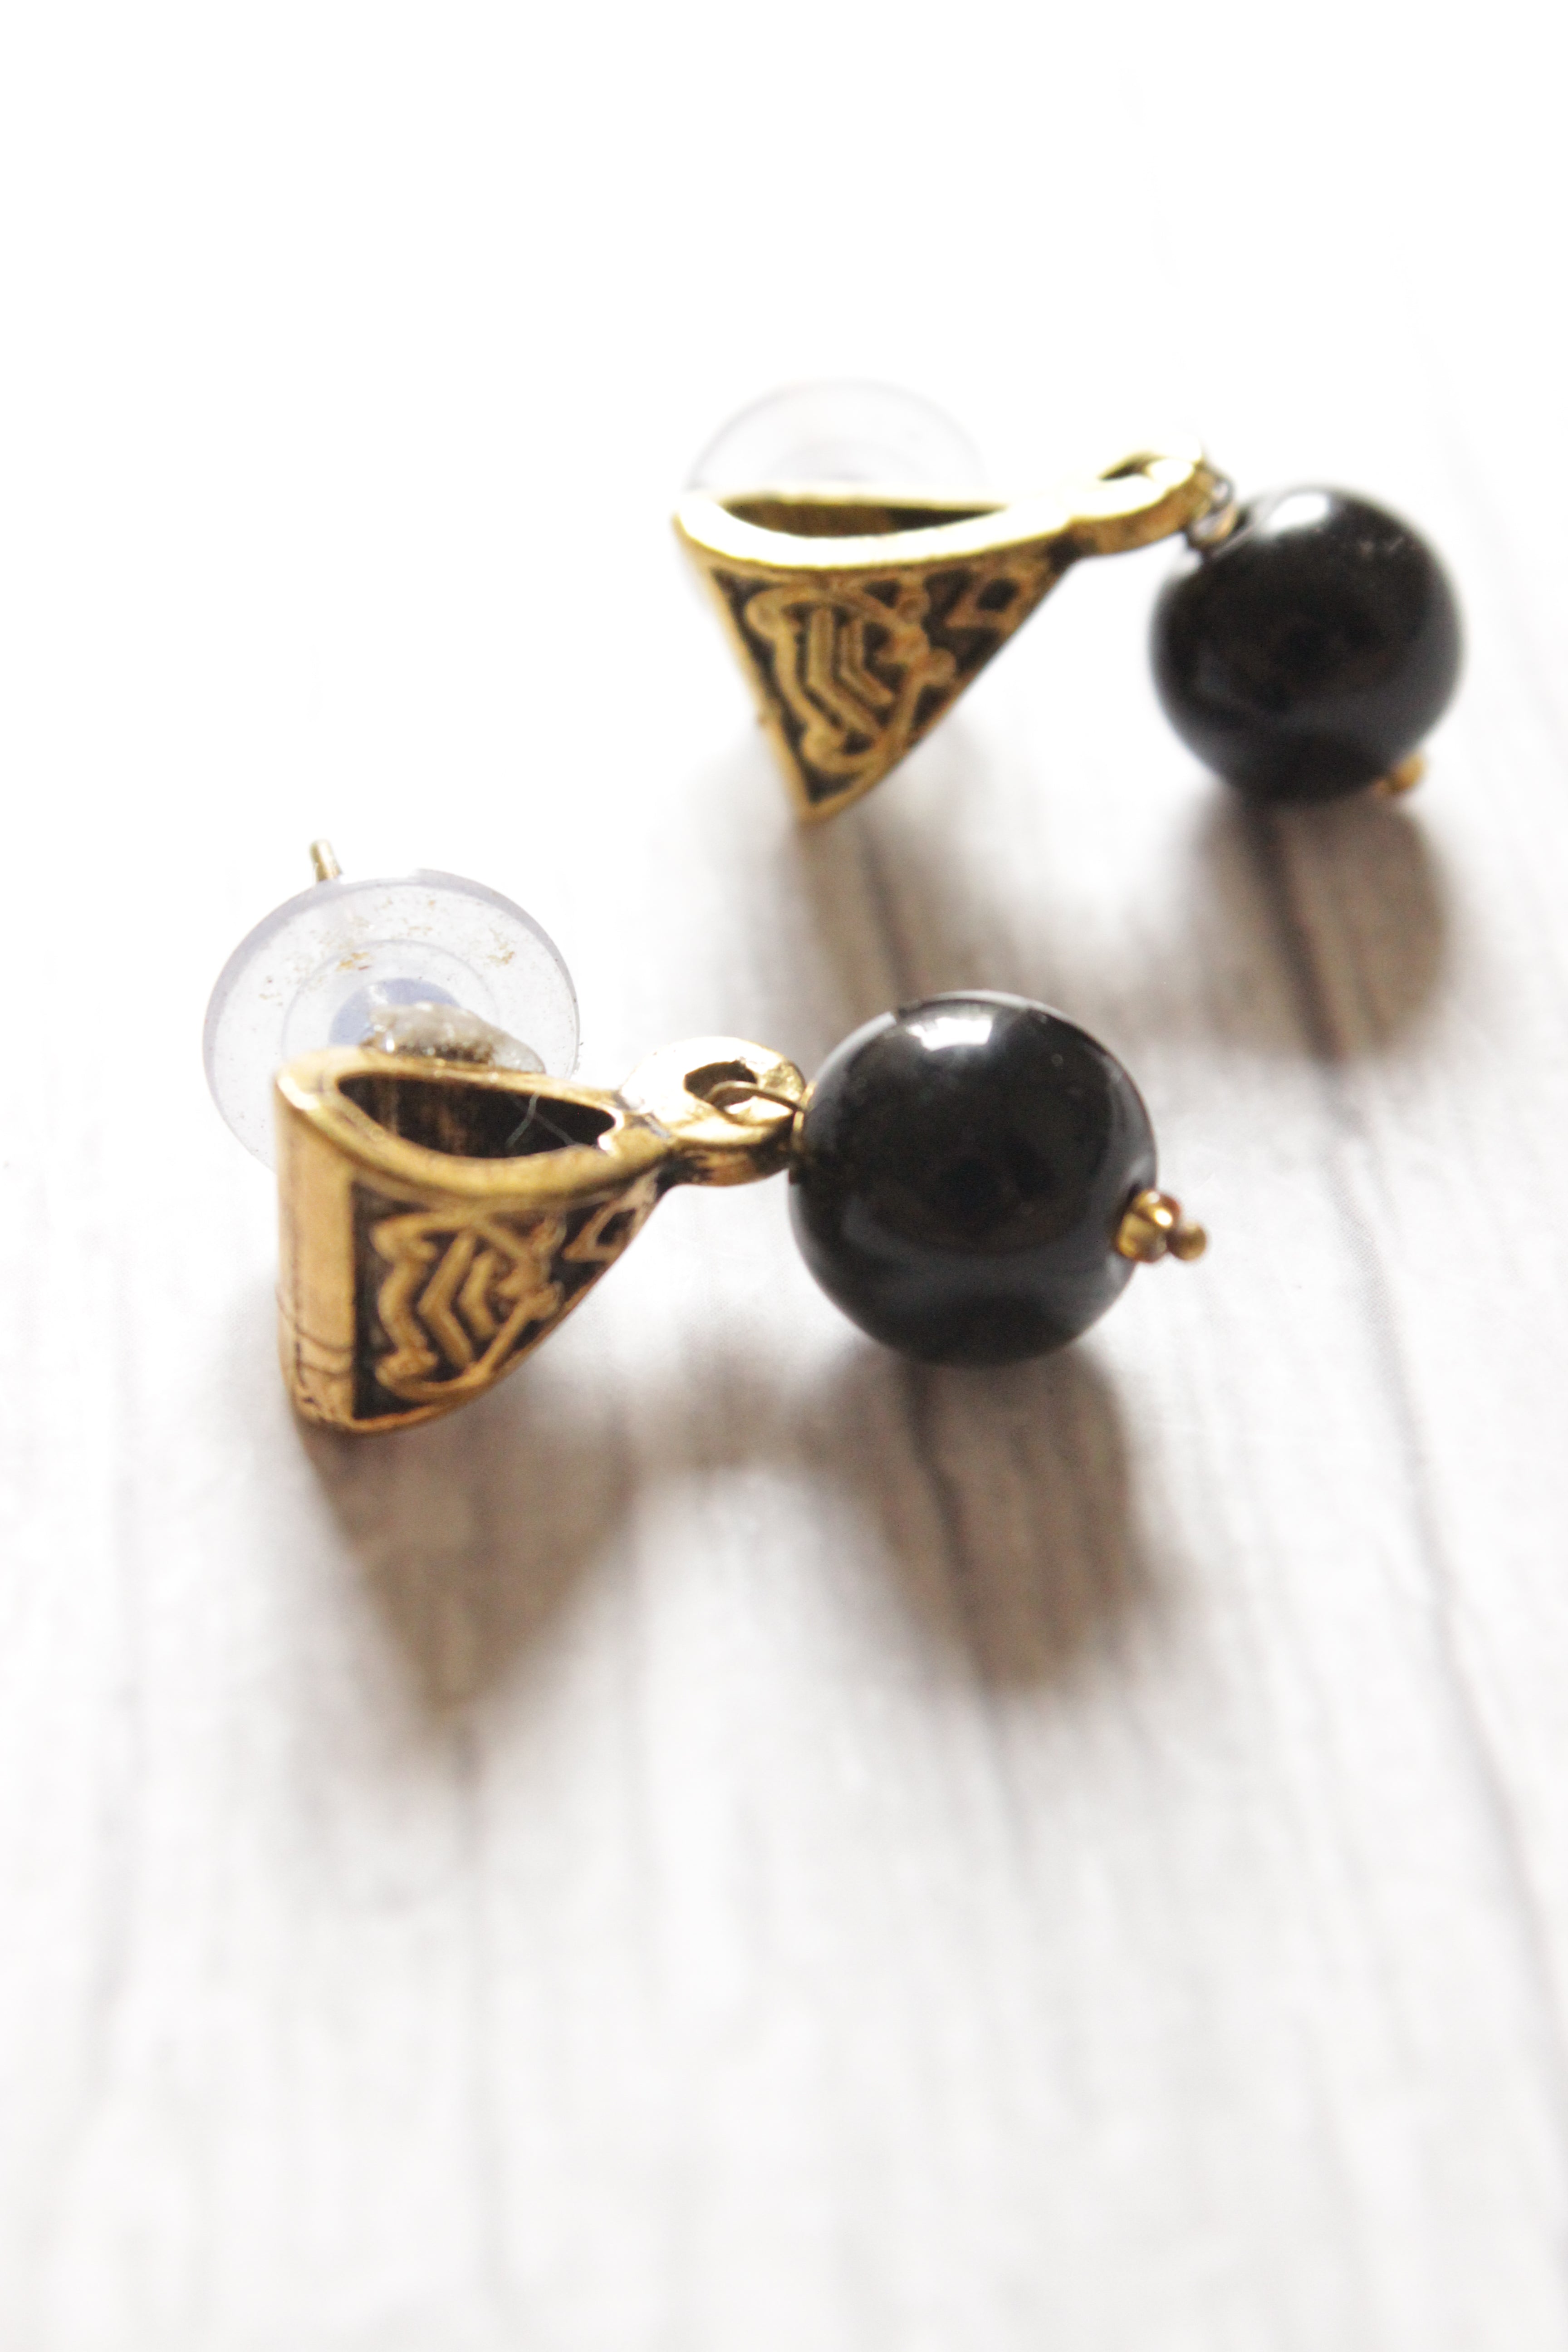 Gold-Toned Black Glass Beads Choker Necklace Set